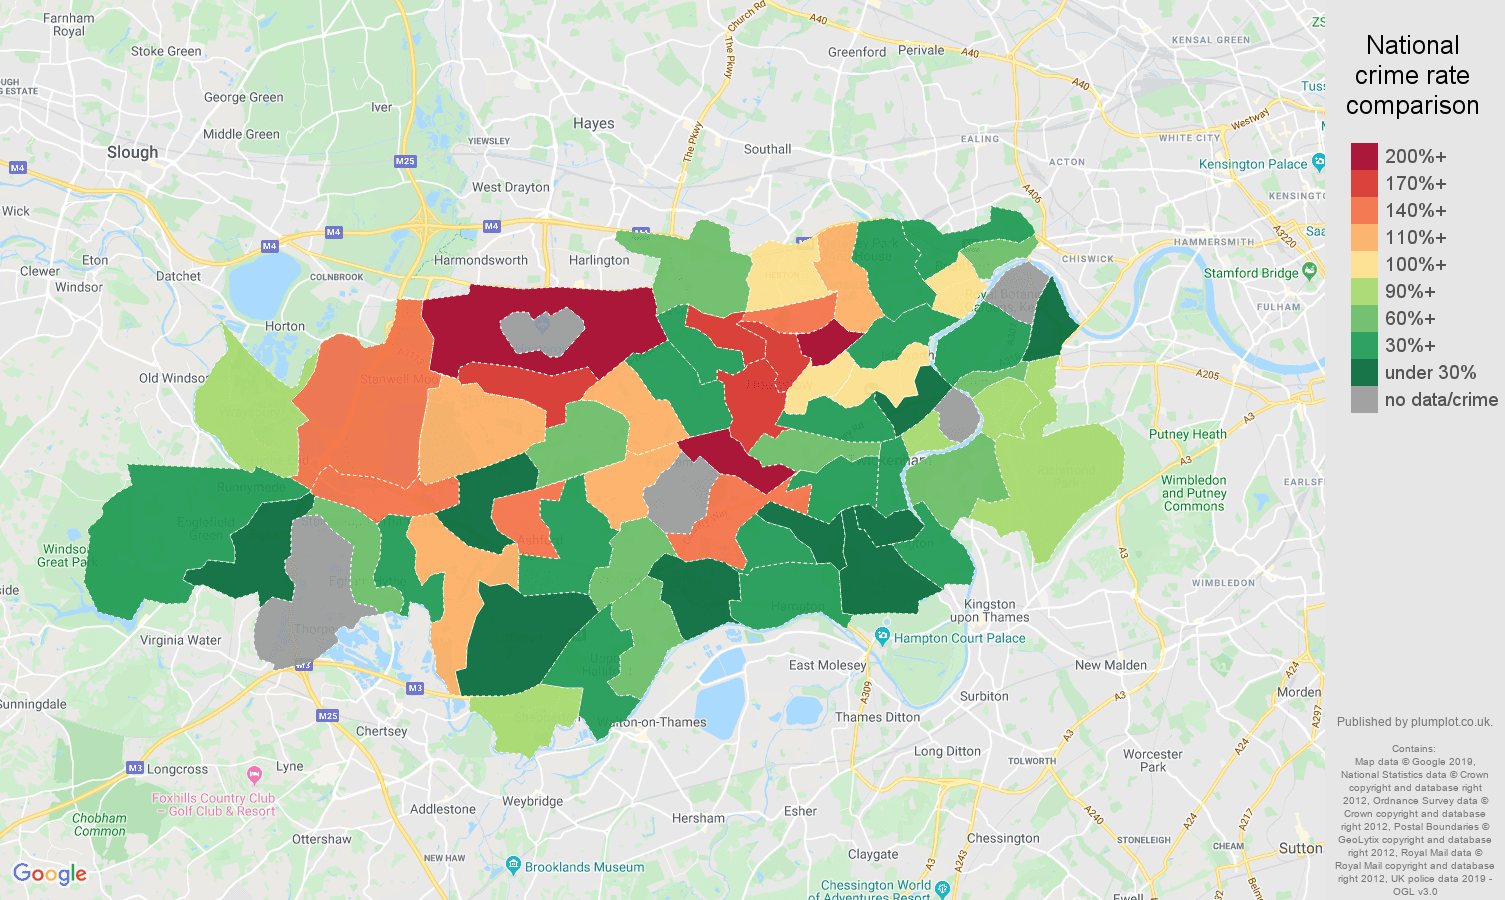 Twickenham possession of weapons crime rate comparison map